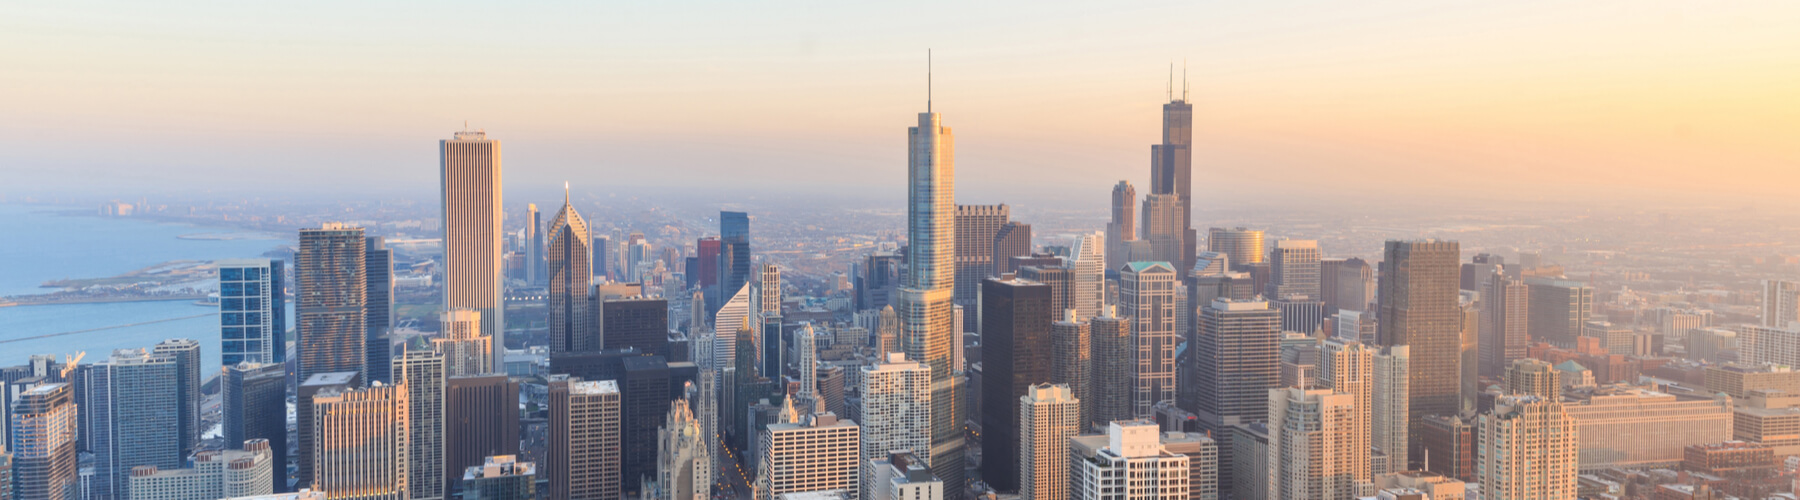 Chicago buildings skyline